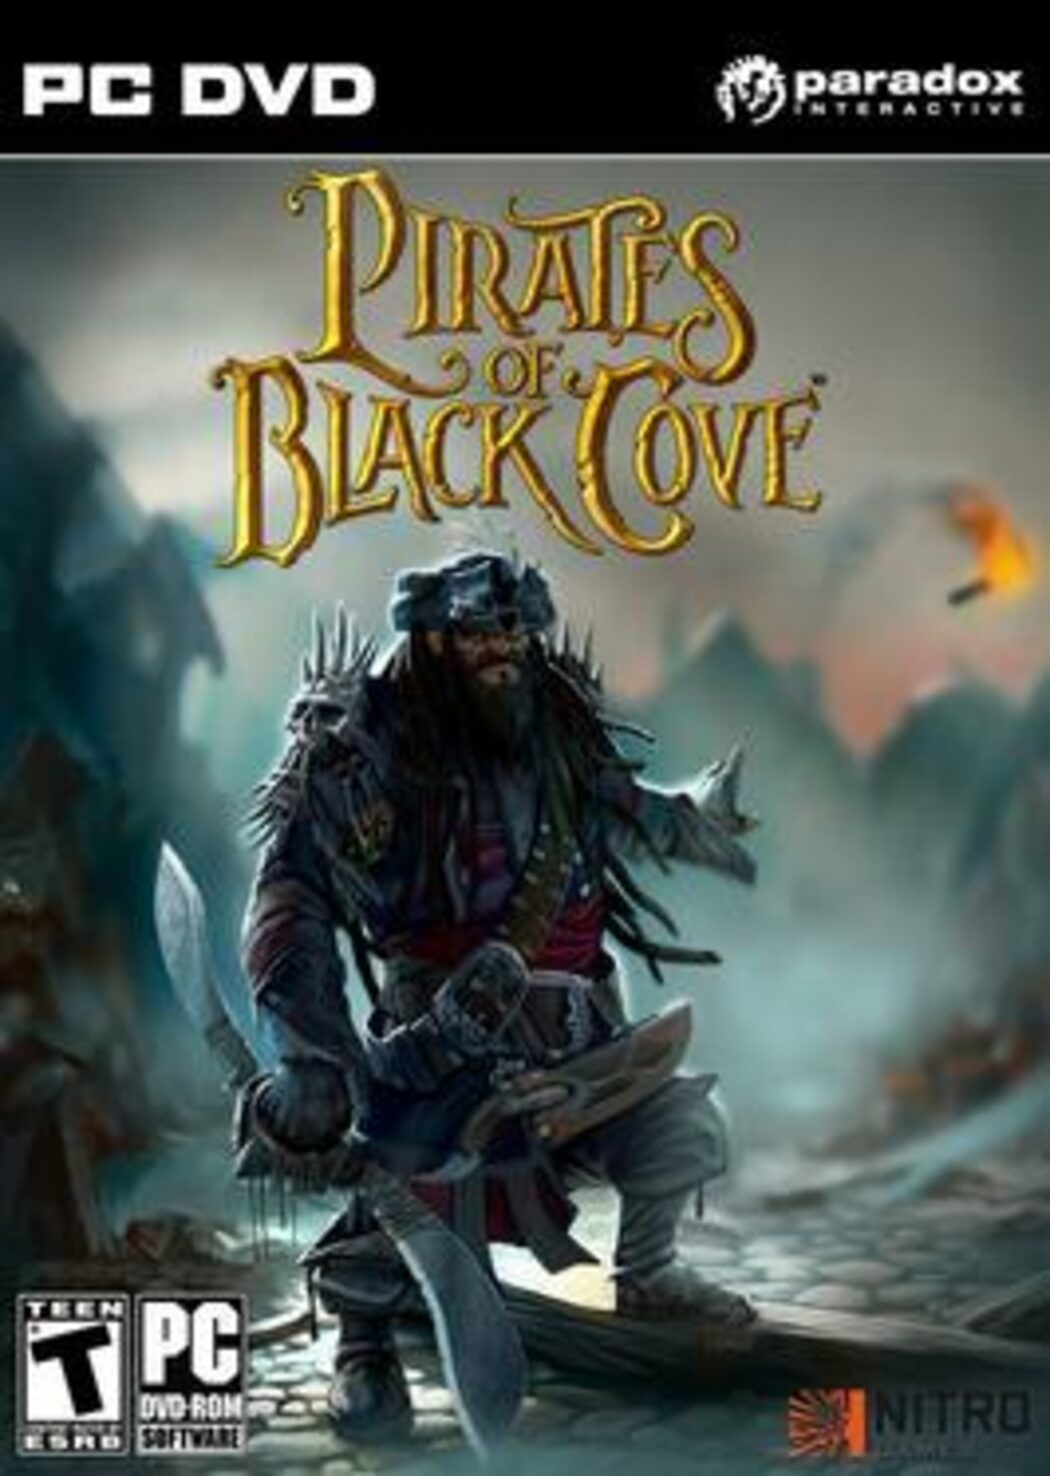 Descargar Pirates Of Black Cove Gold Edition por Torrent VY6wXATfzpRLmMMLSZEF8mgLu1Xs0pVCC4B3EBfL0aY_350x200_3x-0